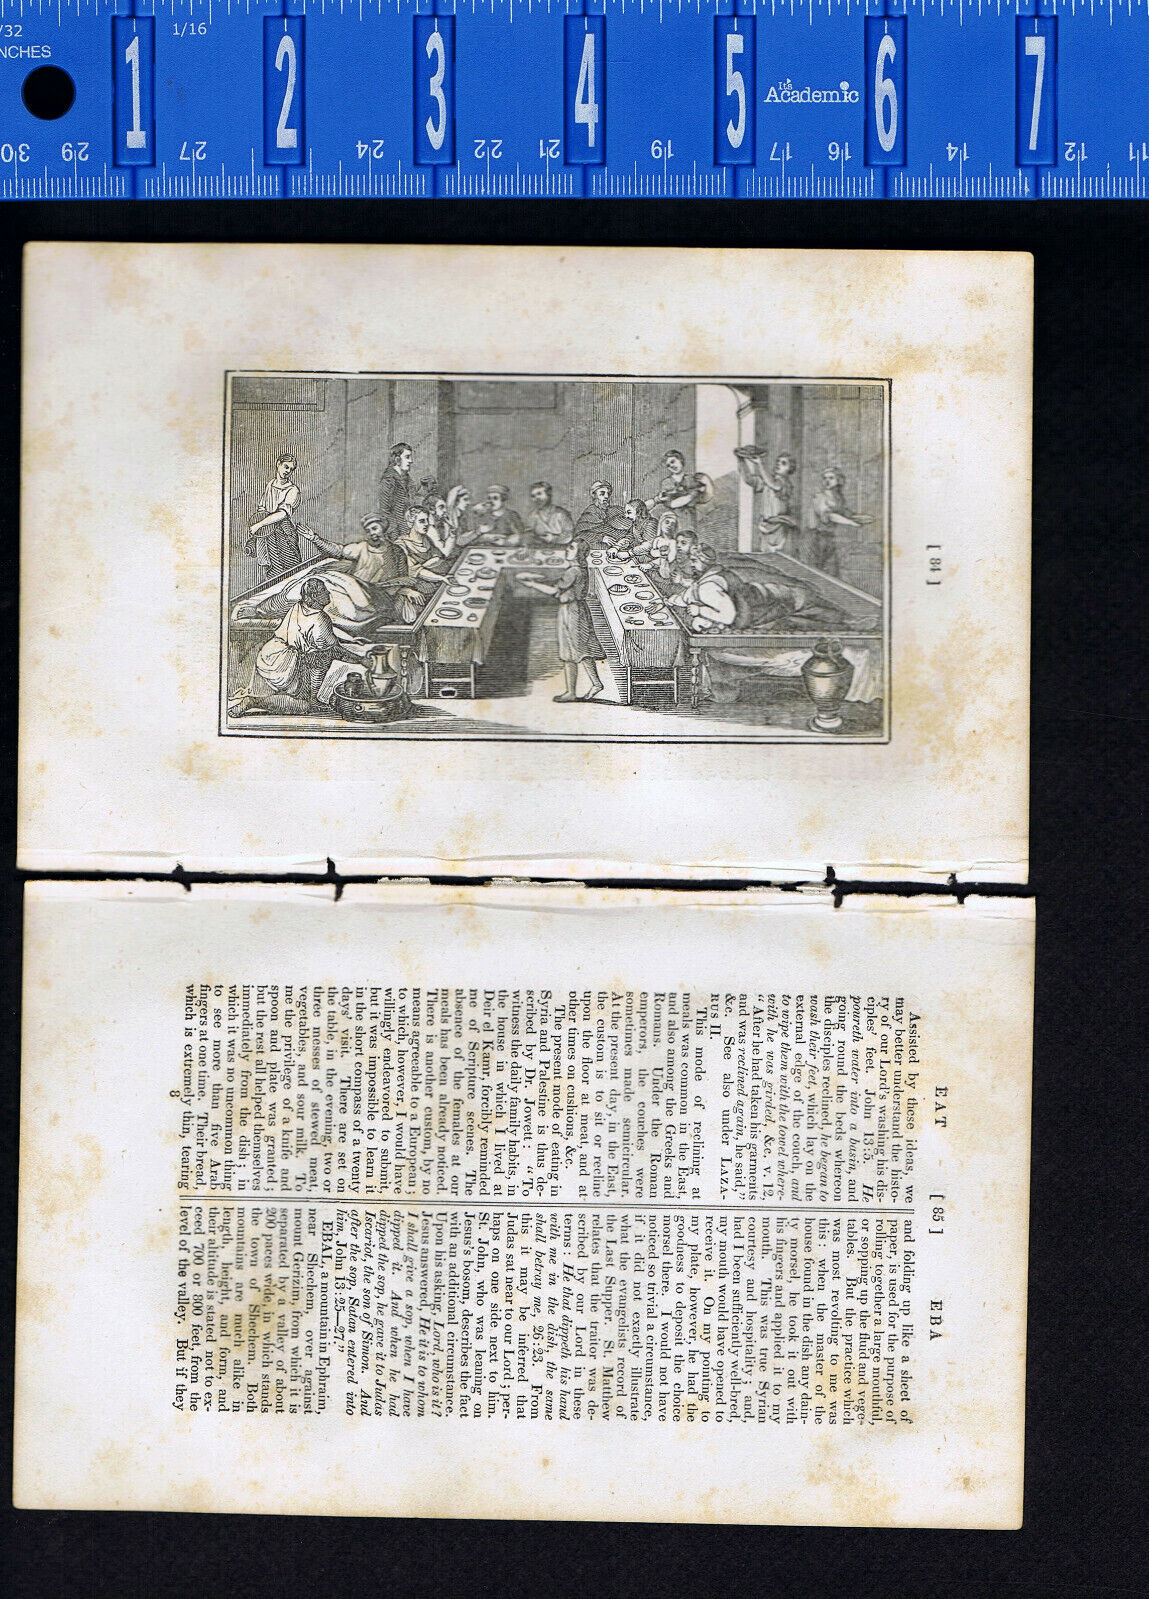 Dining-Eating Habits of Hebrews in Biblical Times - 1833 Engraving